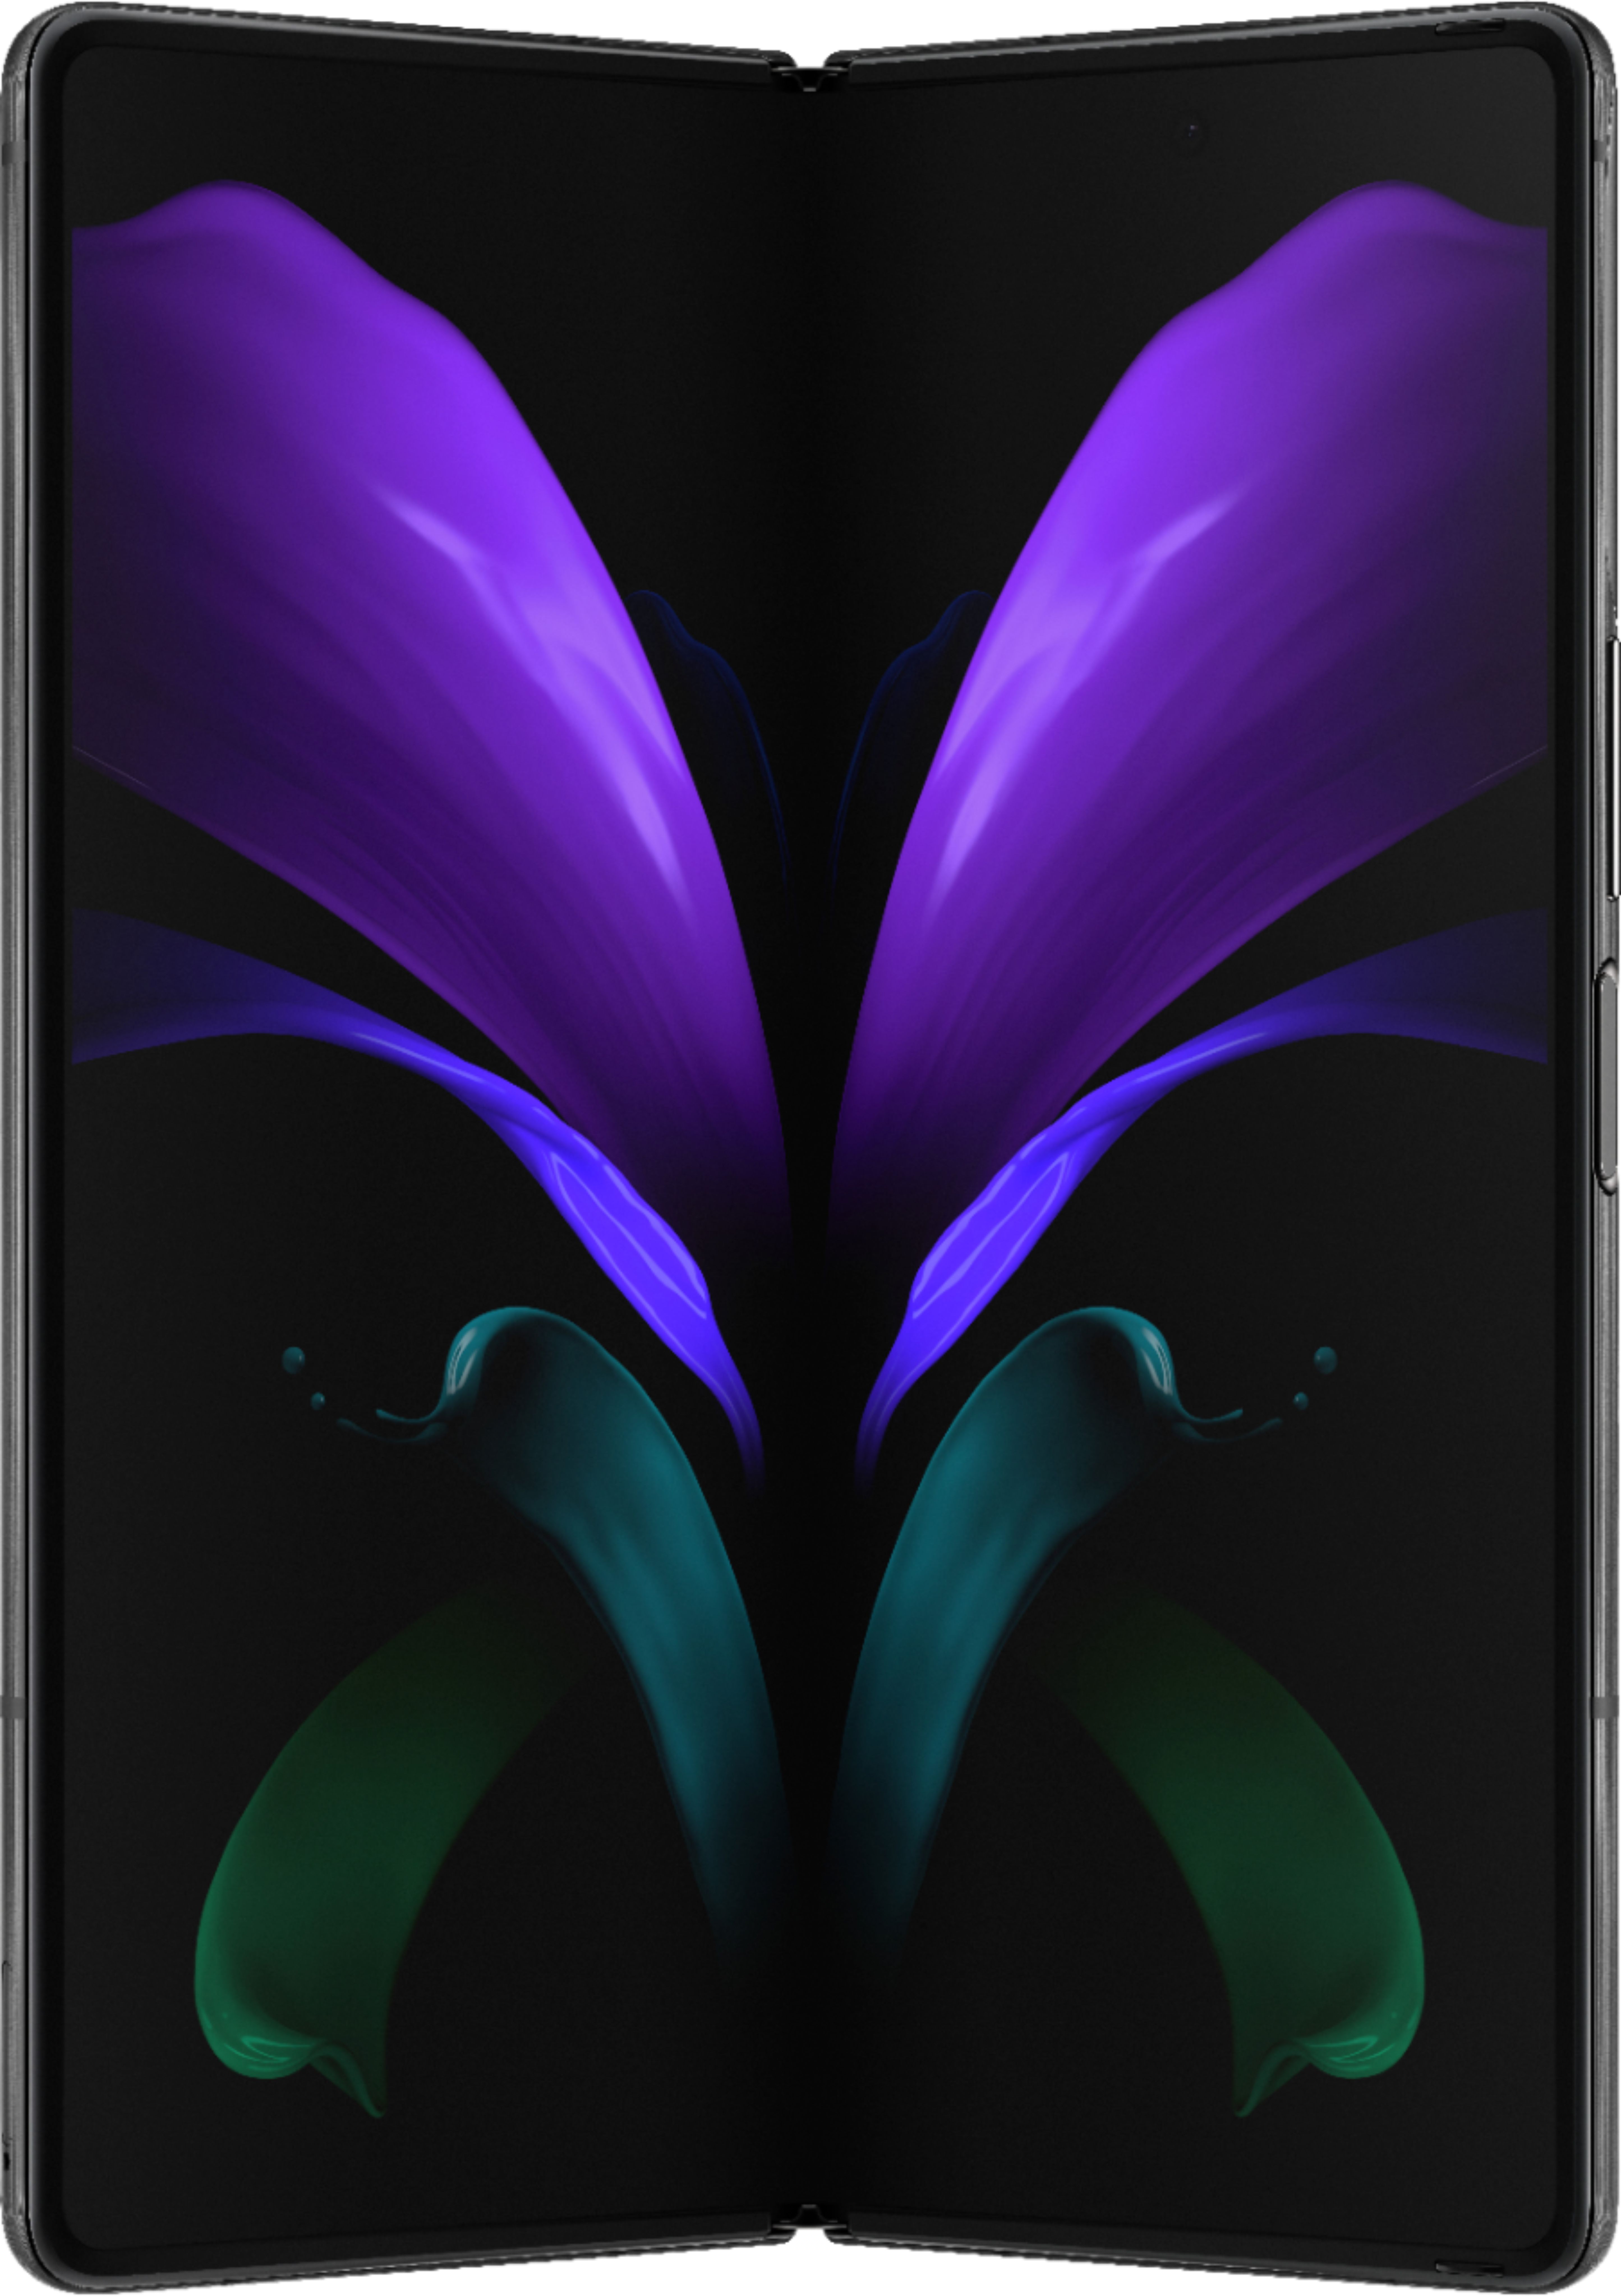 Samsung - Galaxy Z Fold2 5G 256GB - Mystic Black (Sprint)